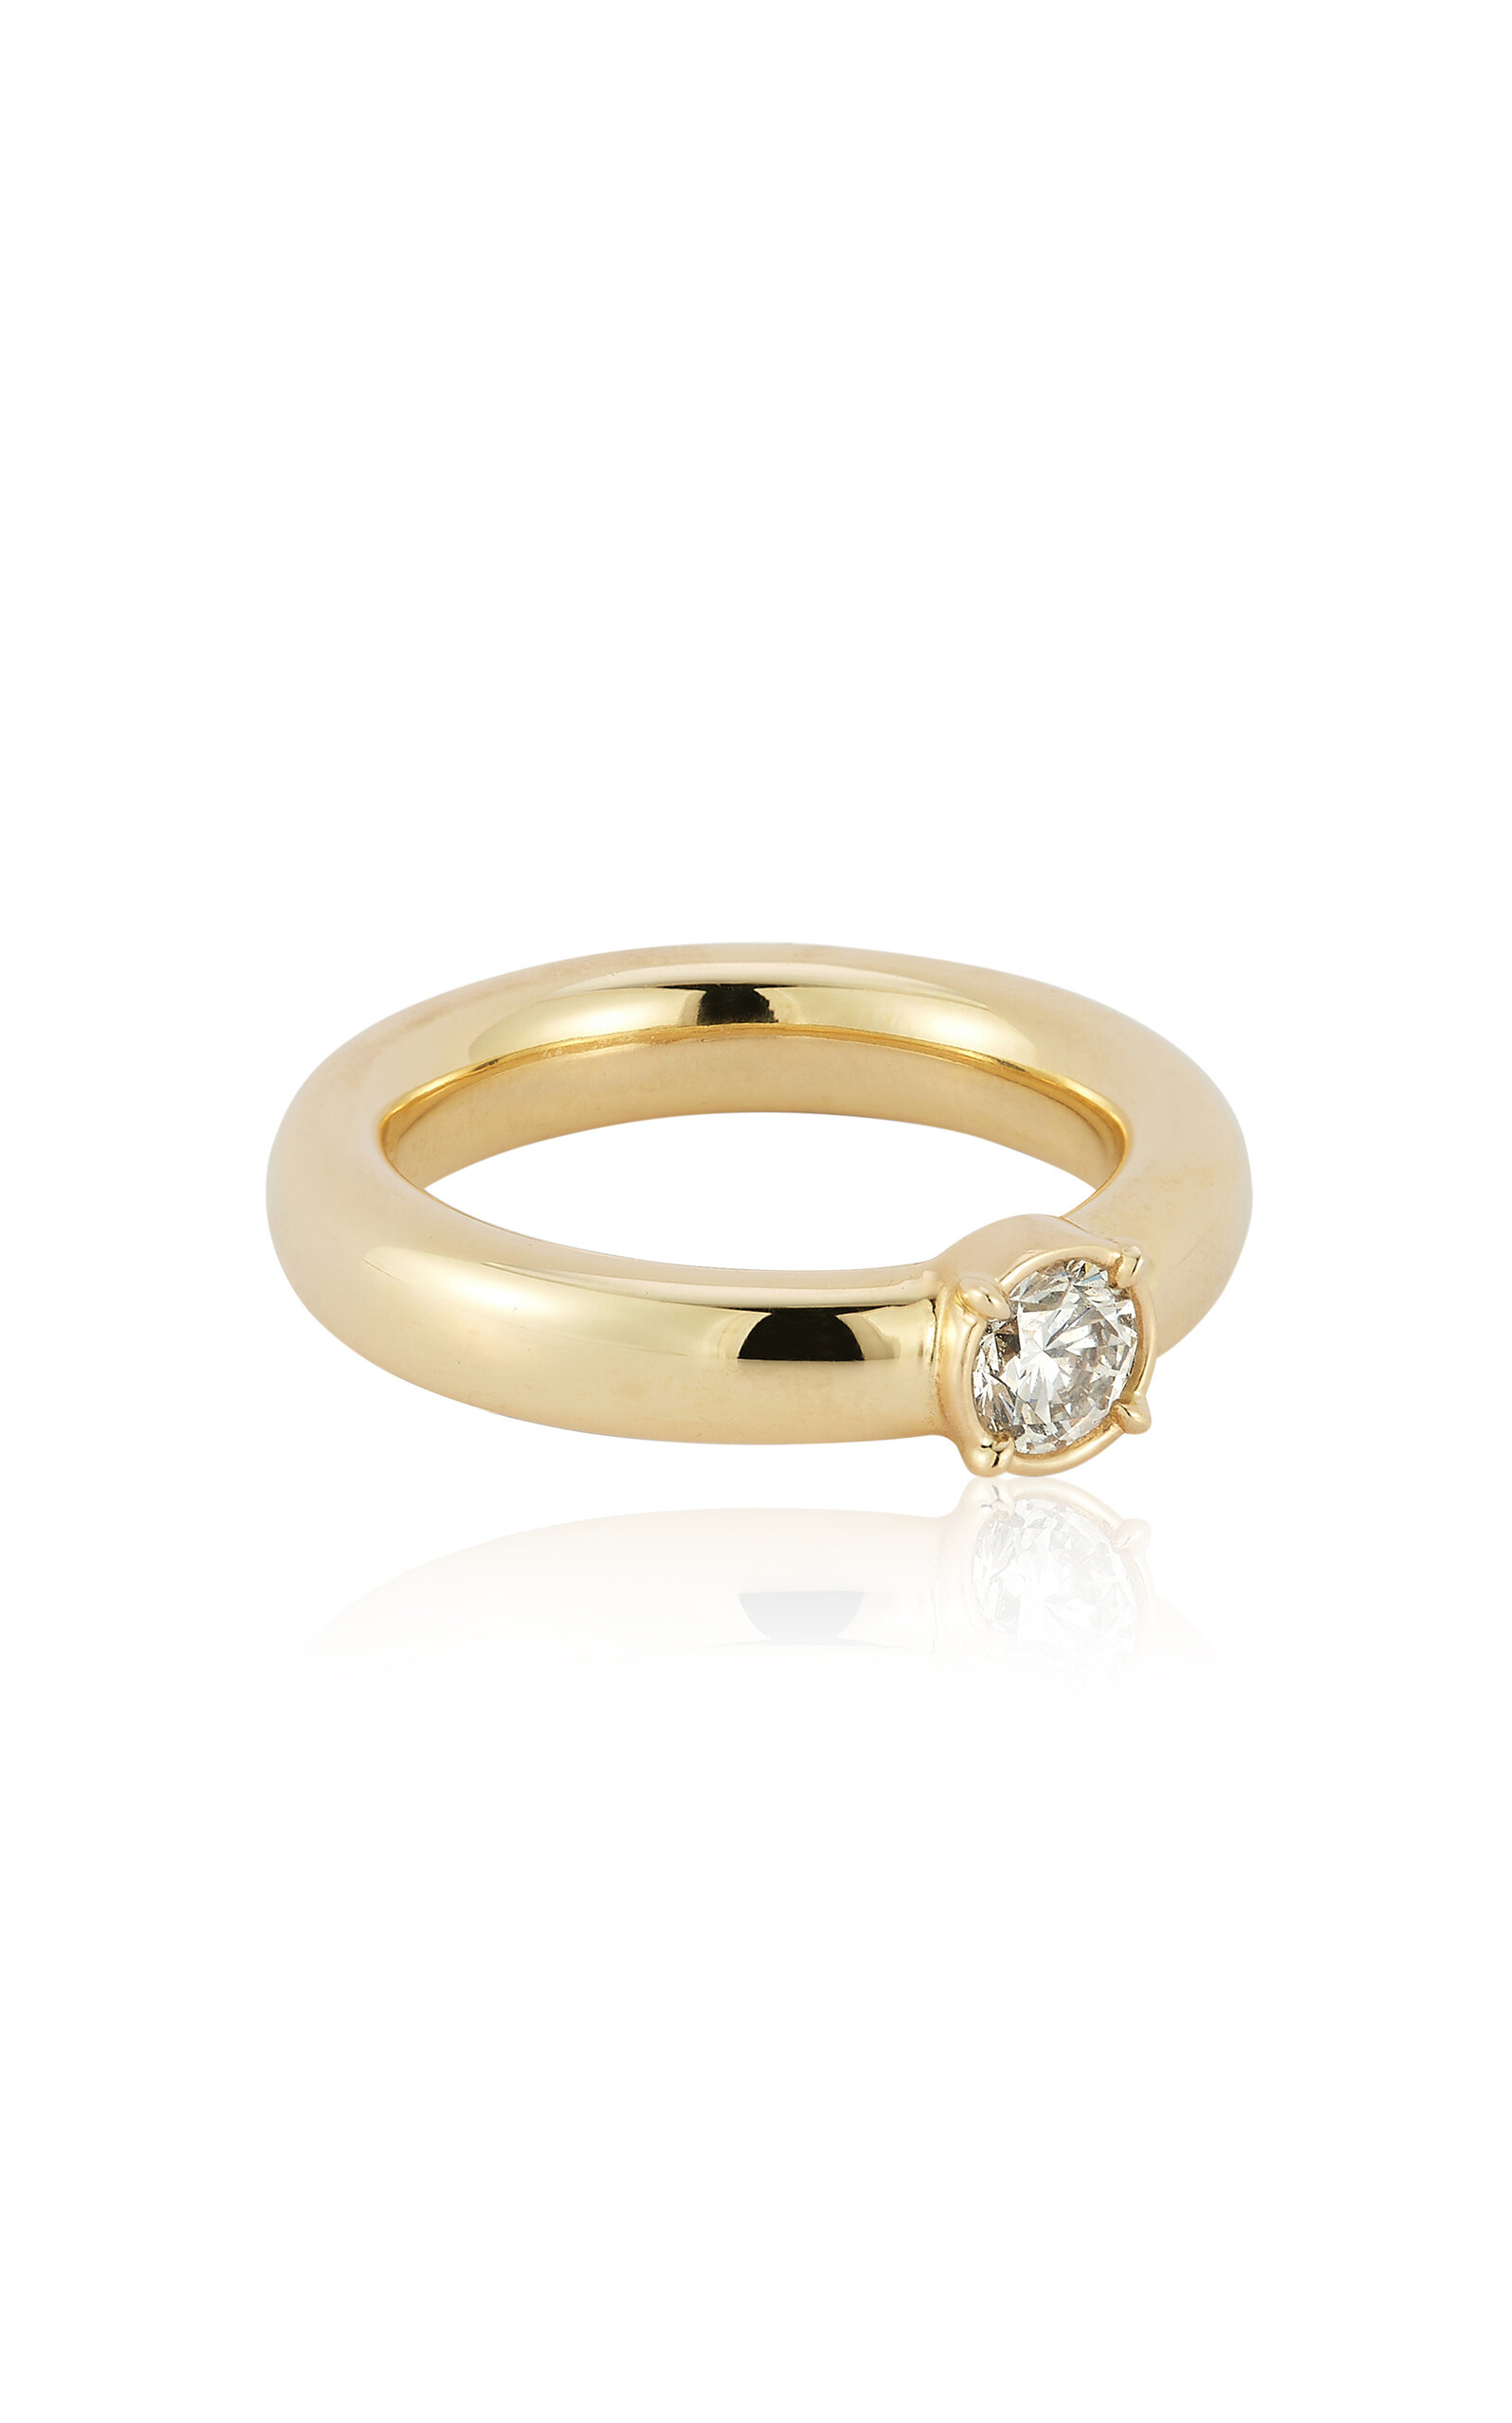 Signature 14K Yellow Gold Diamond Solitaire Ring